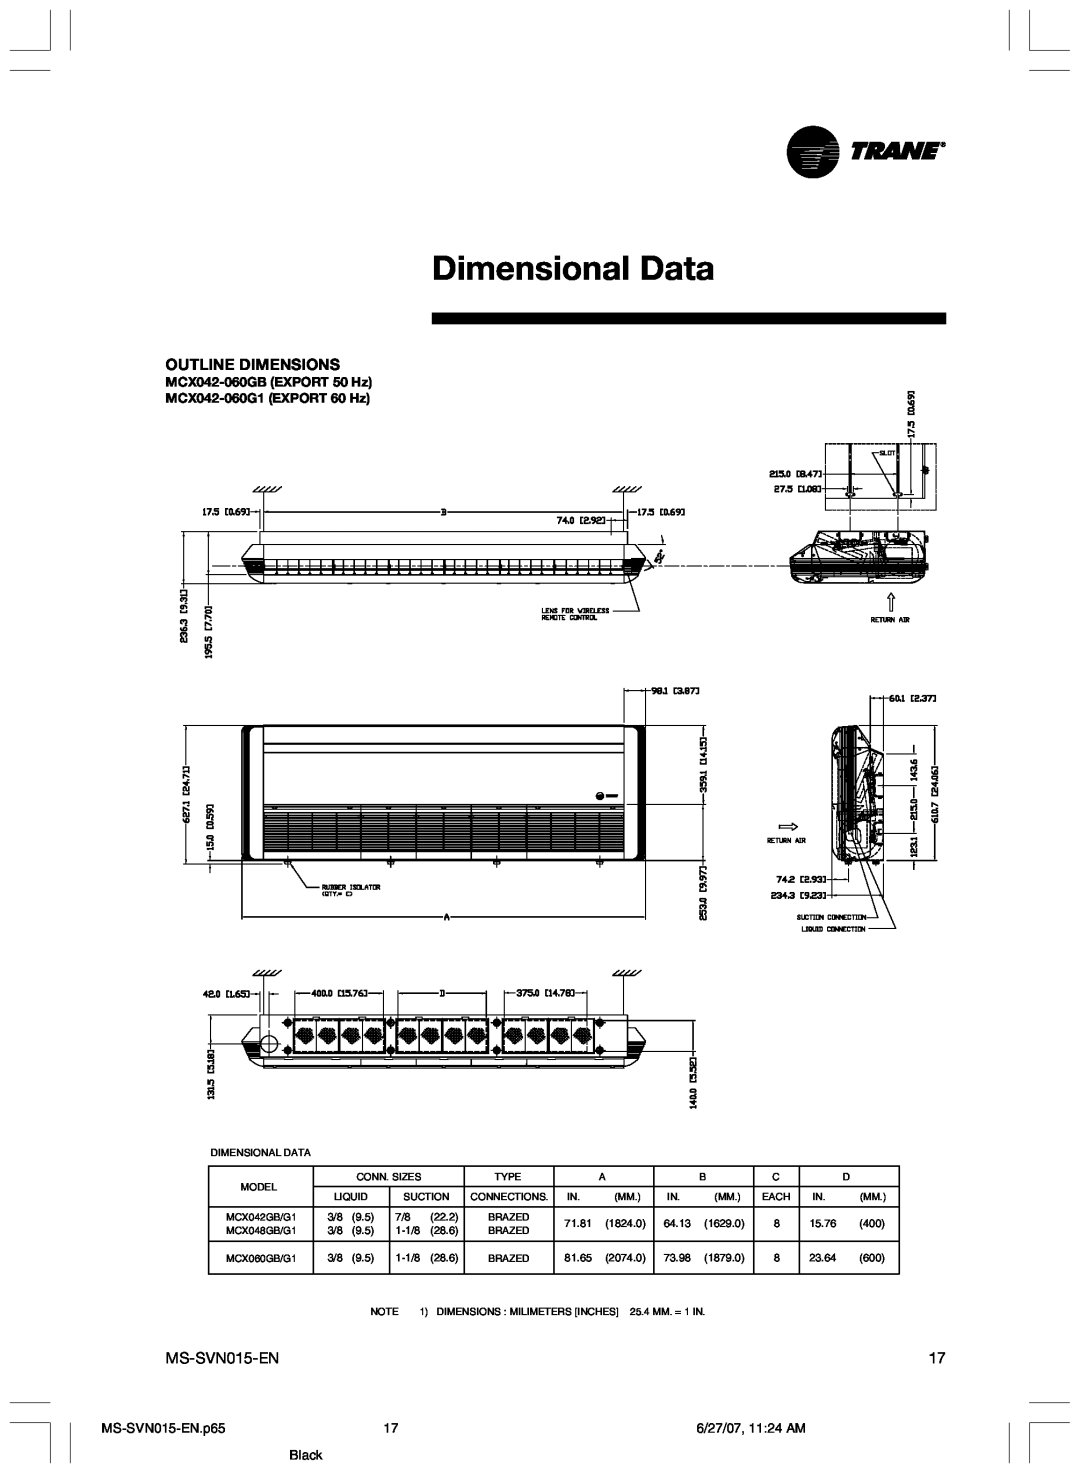 Trane MS-SVN015-EN Dimensional Data, Outline Dimensions, MCX042-060GBEXPORT 50 Hz MCX042-060G1EXPORT 60 Hz, Black 